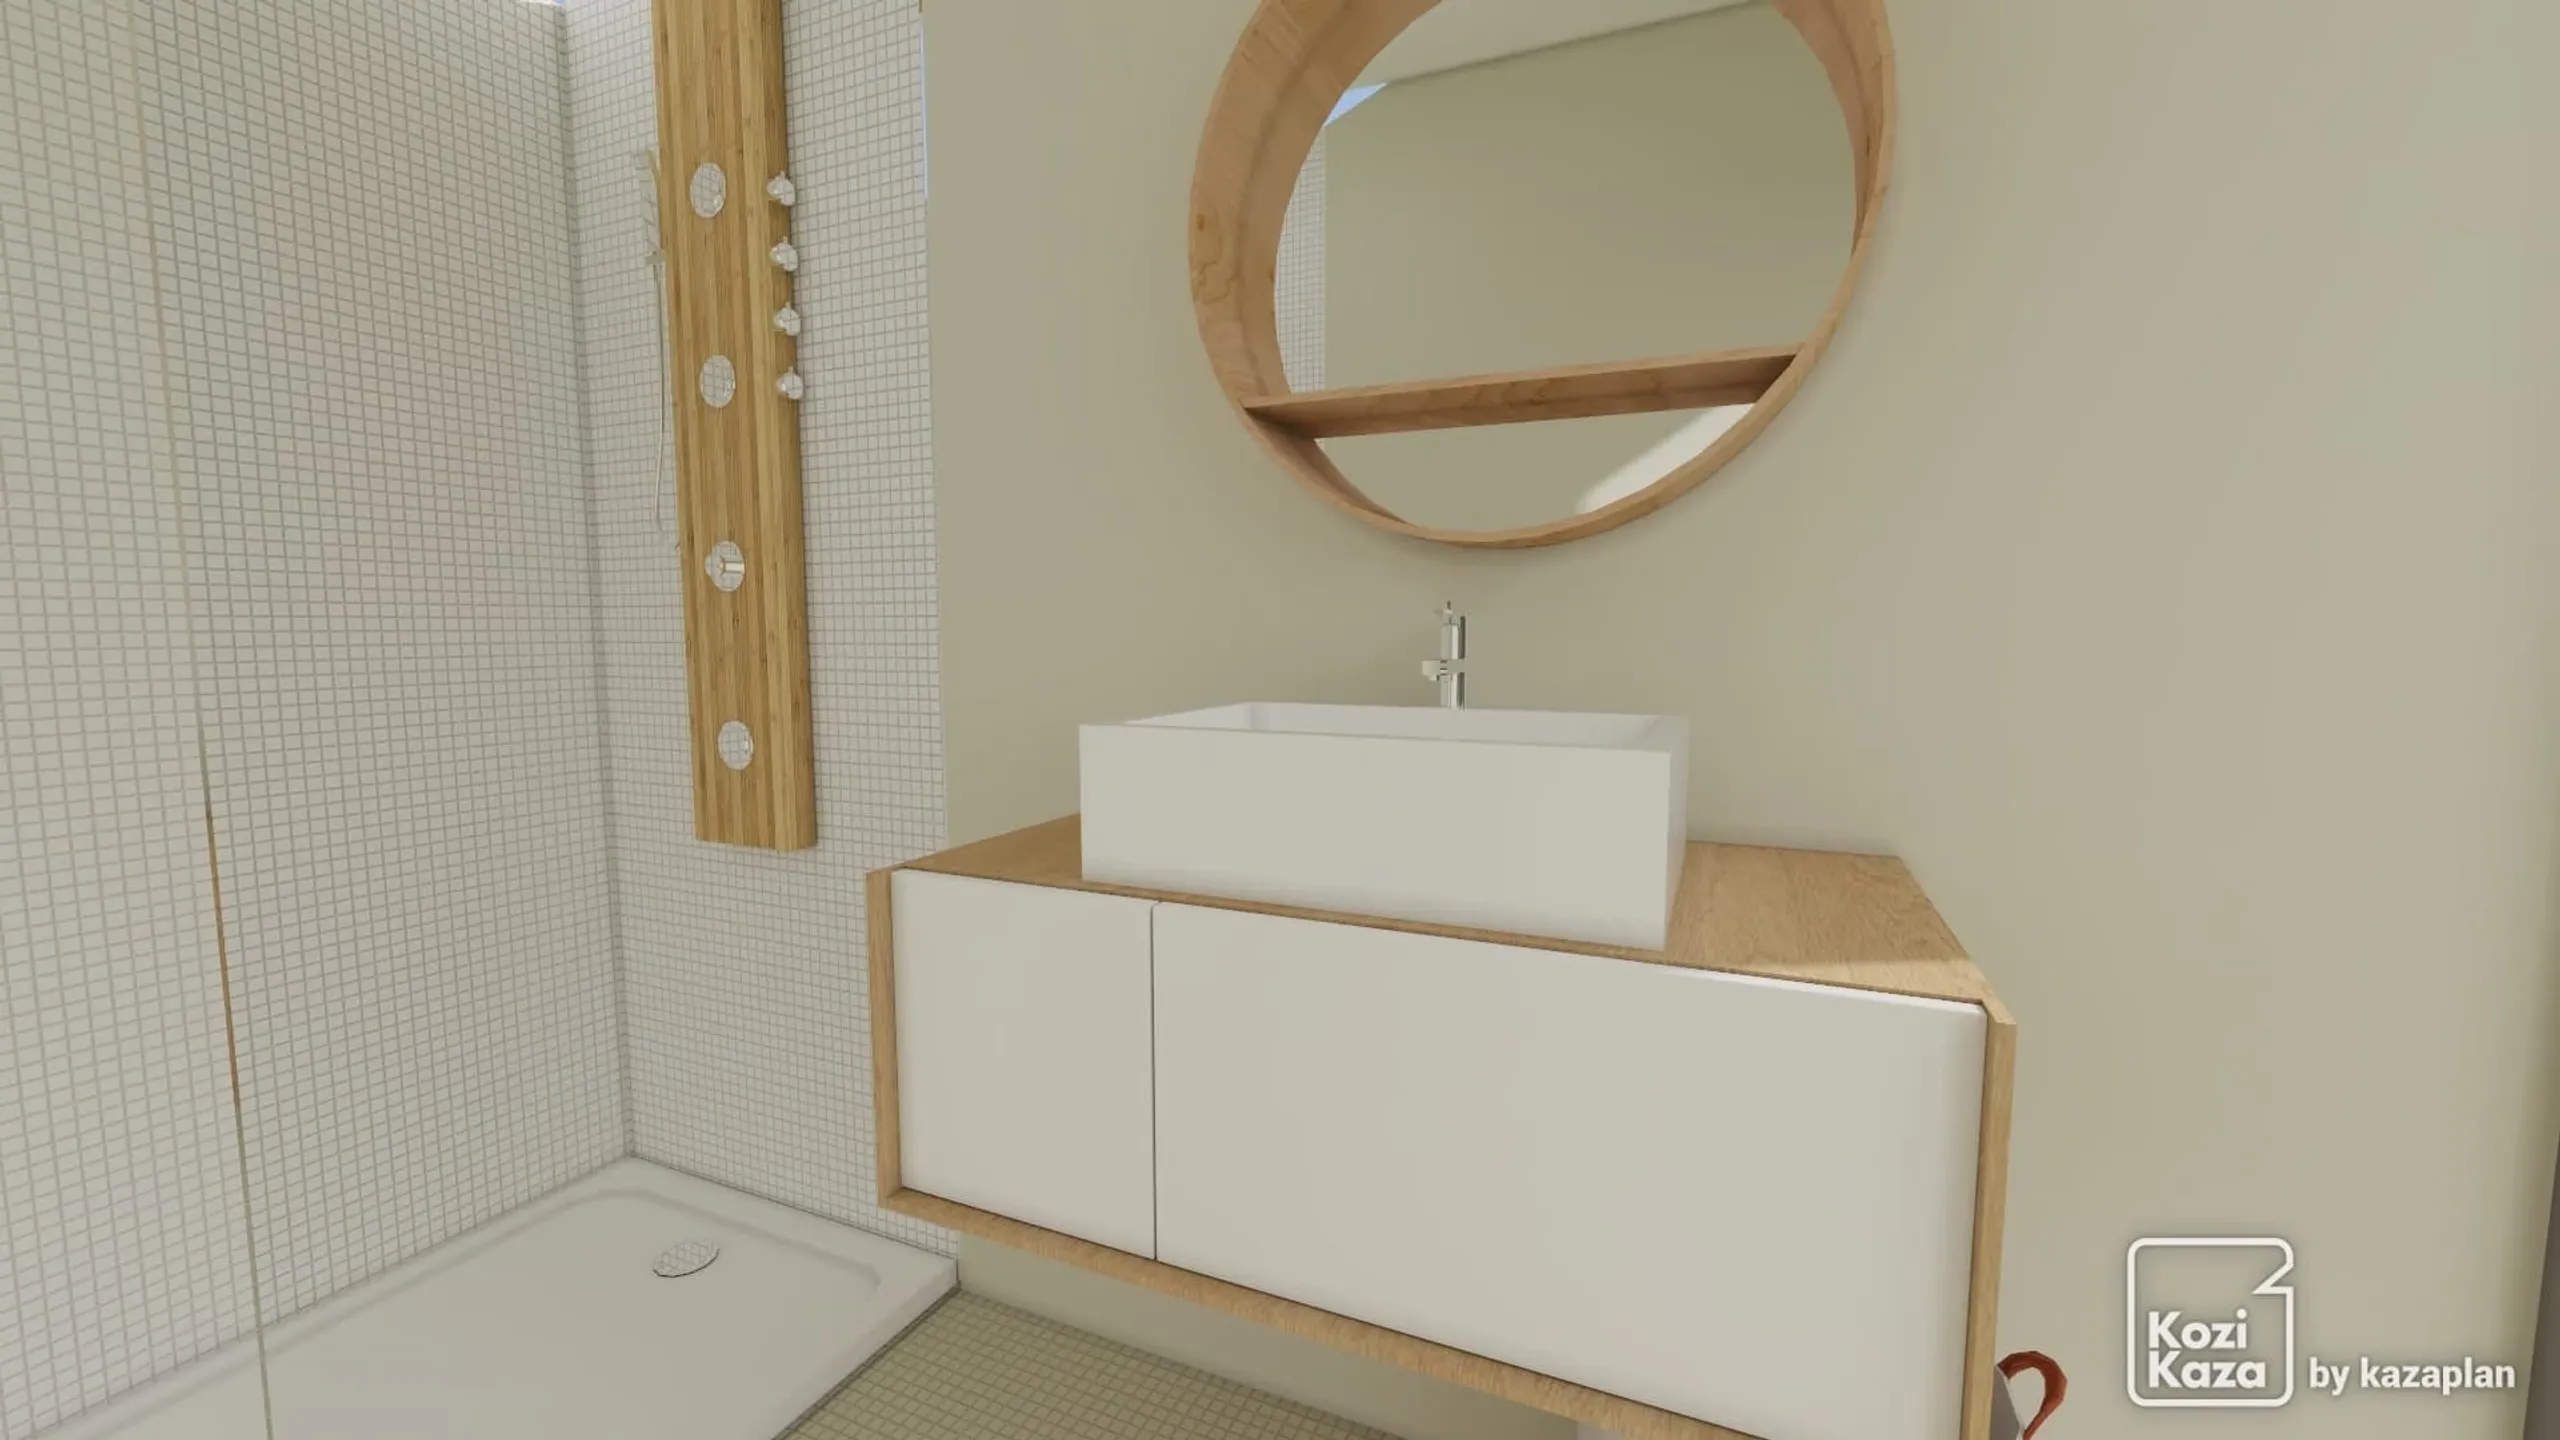 Idea bathroom white and green 3D 2